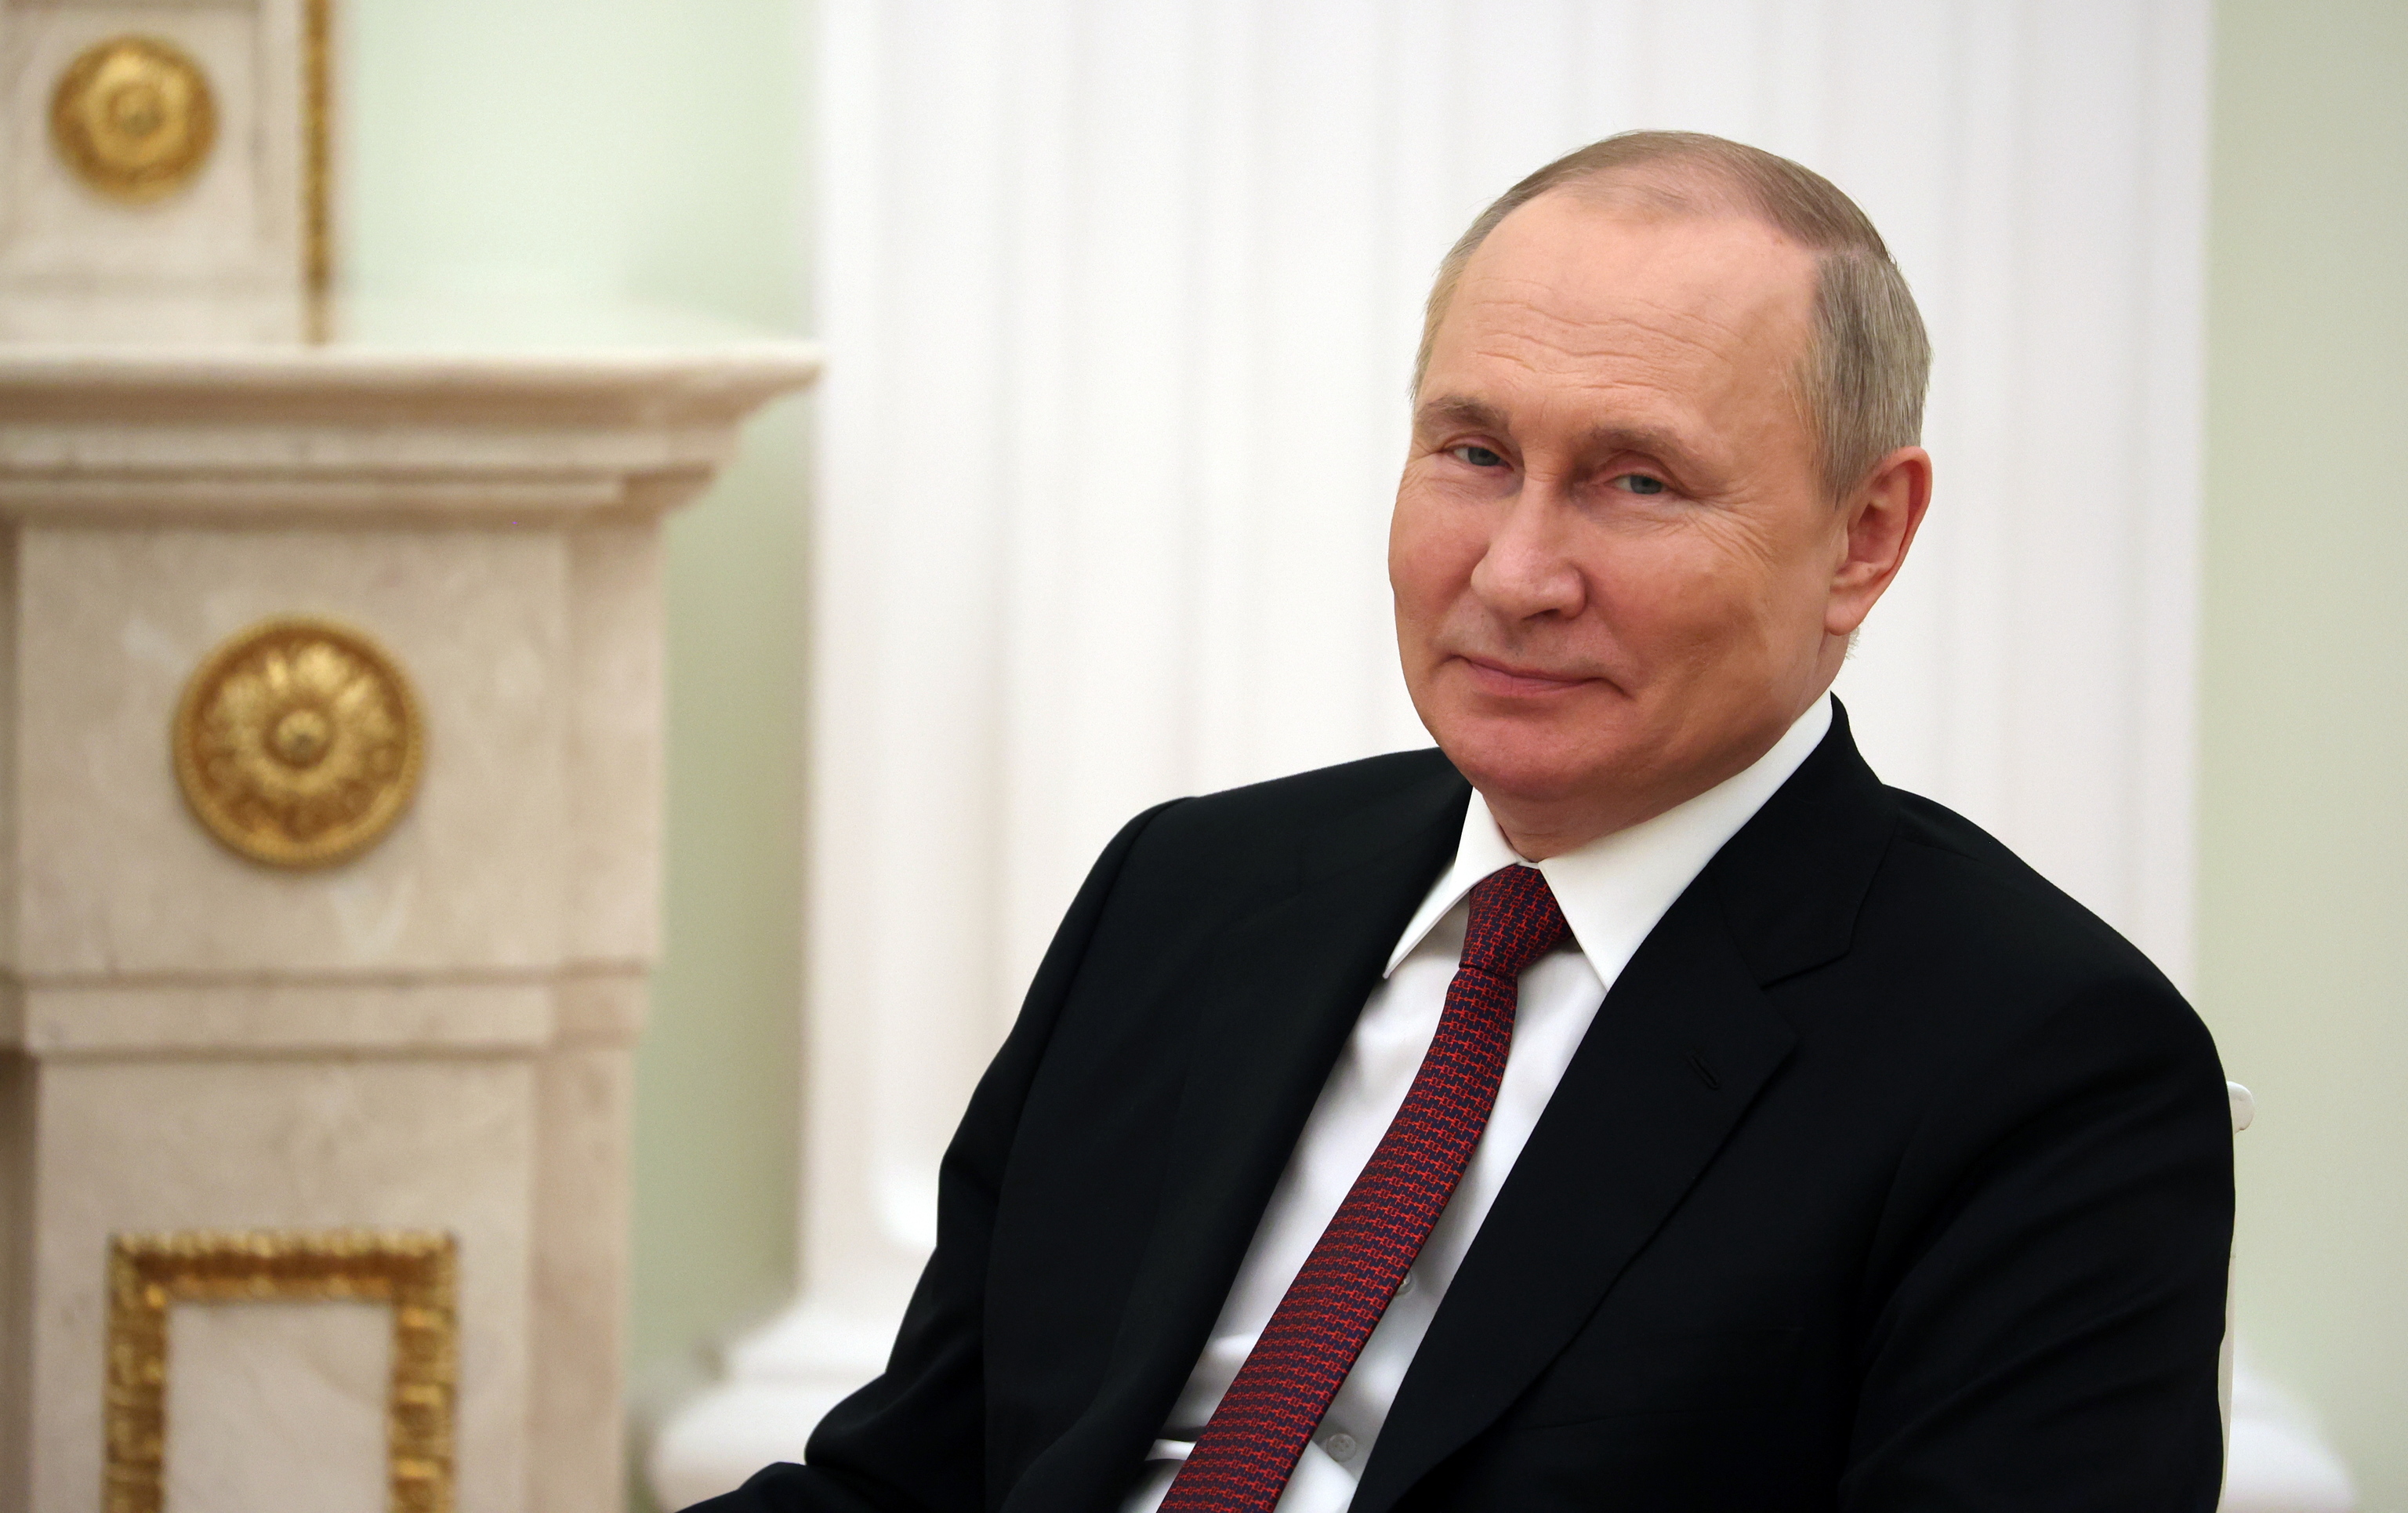 Russian President Vladimir Putin during a meeting in the Kremlin.